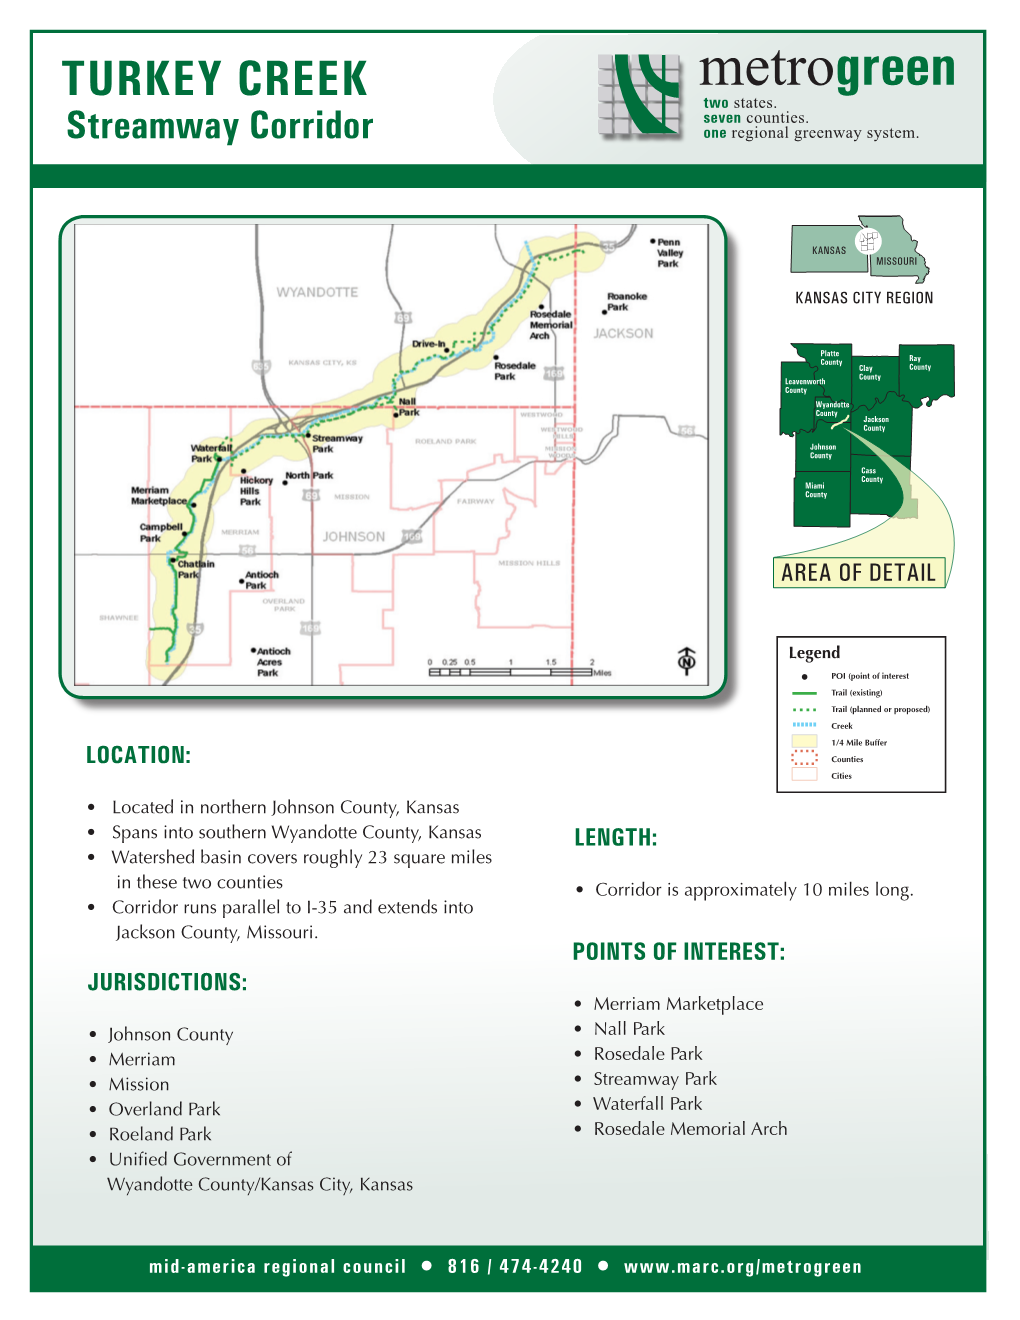 Turkey Creek Streamway Corridor Fact Sheet